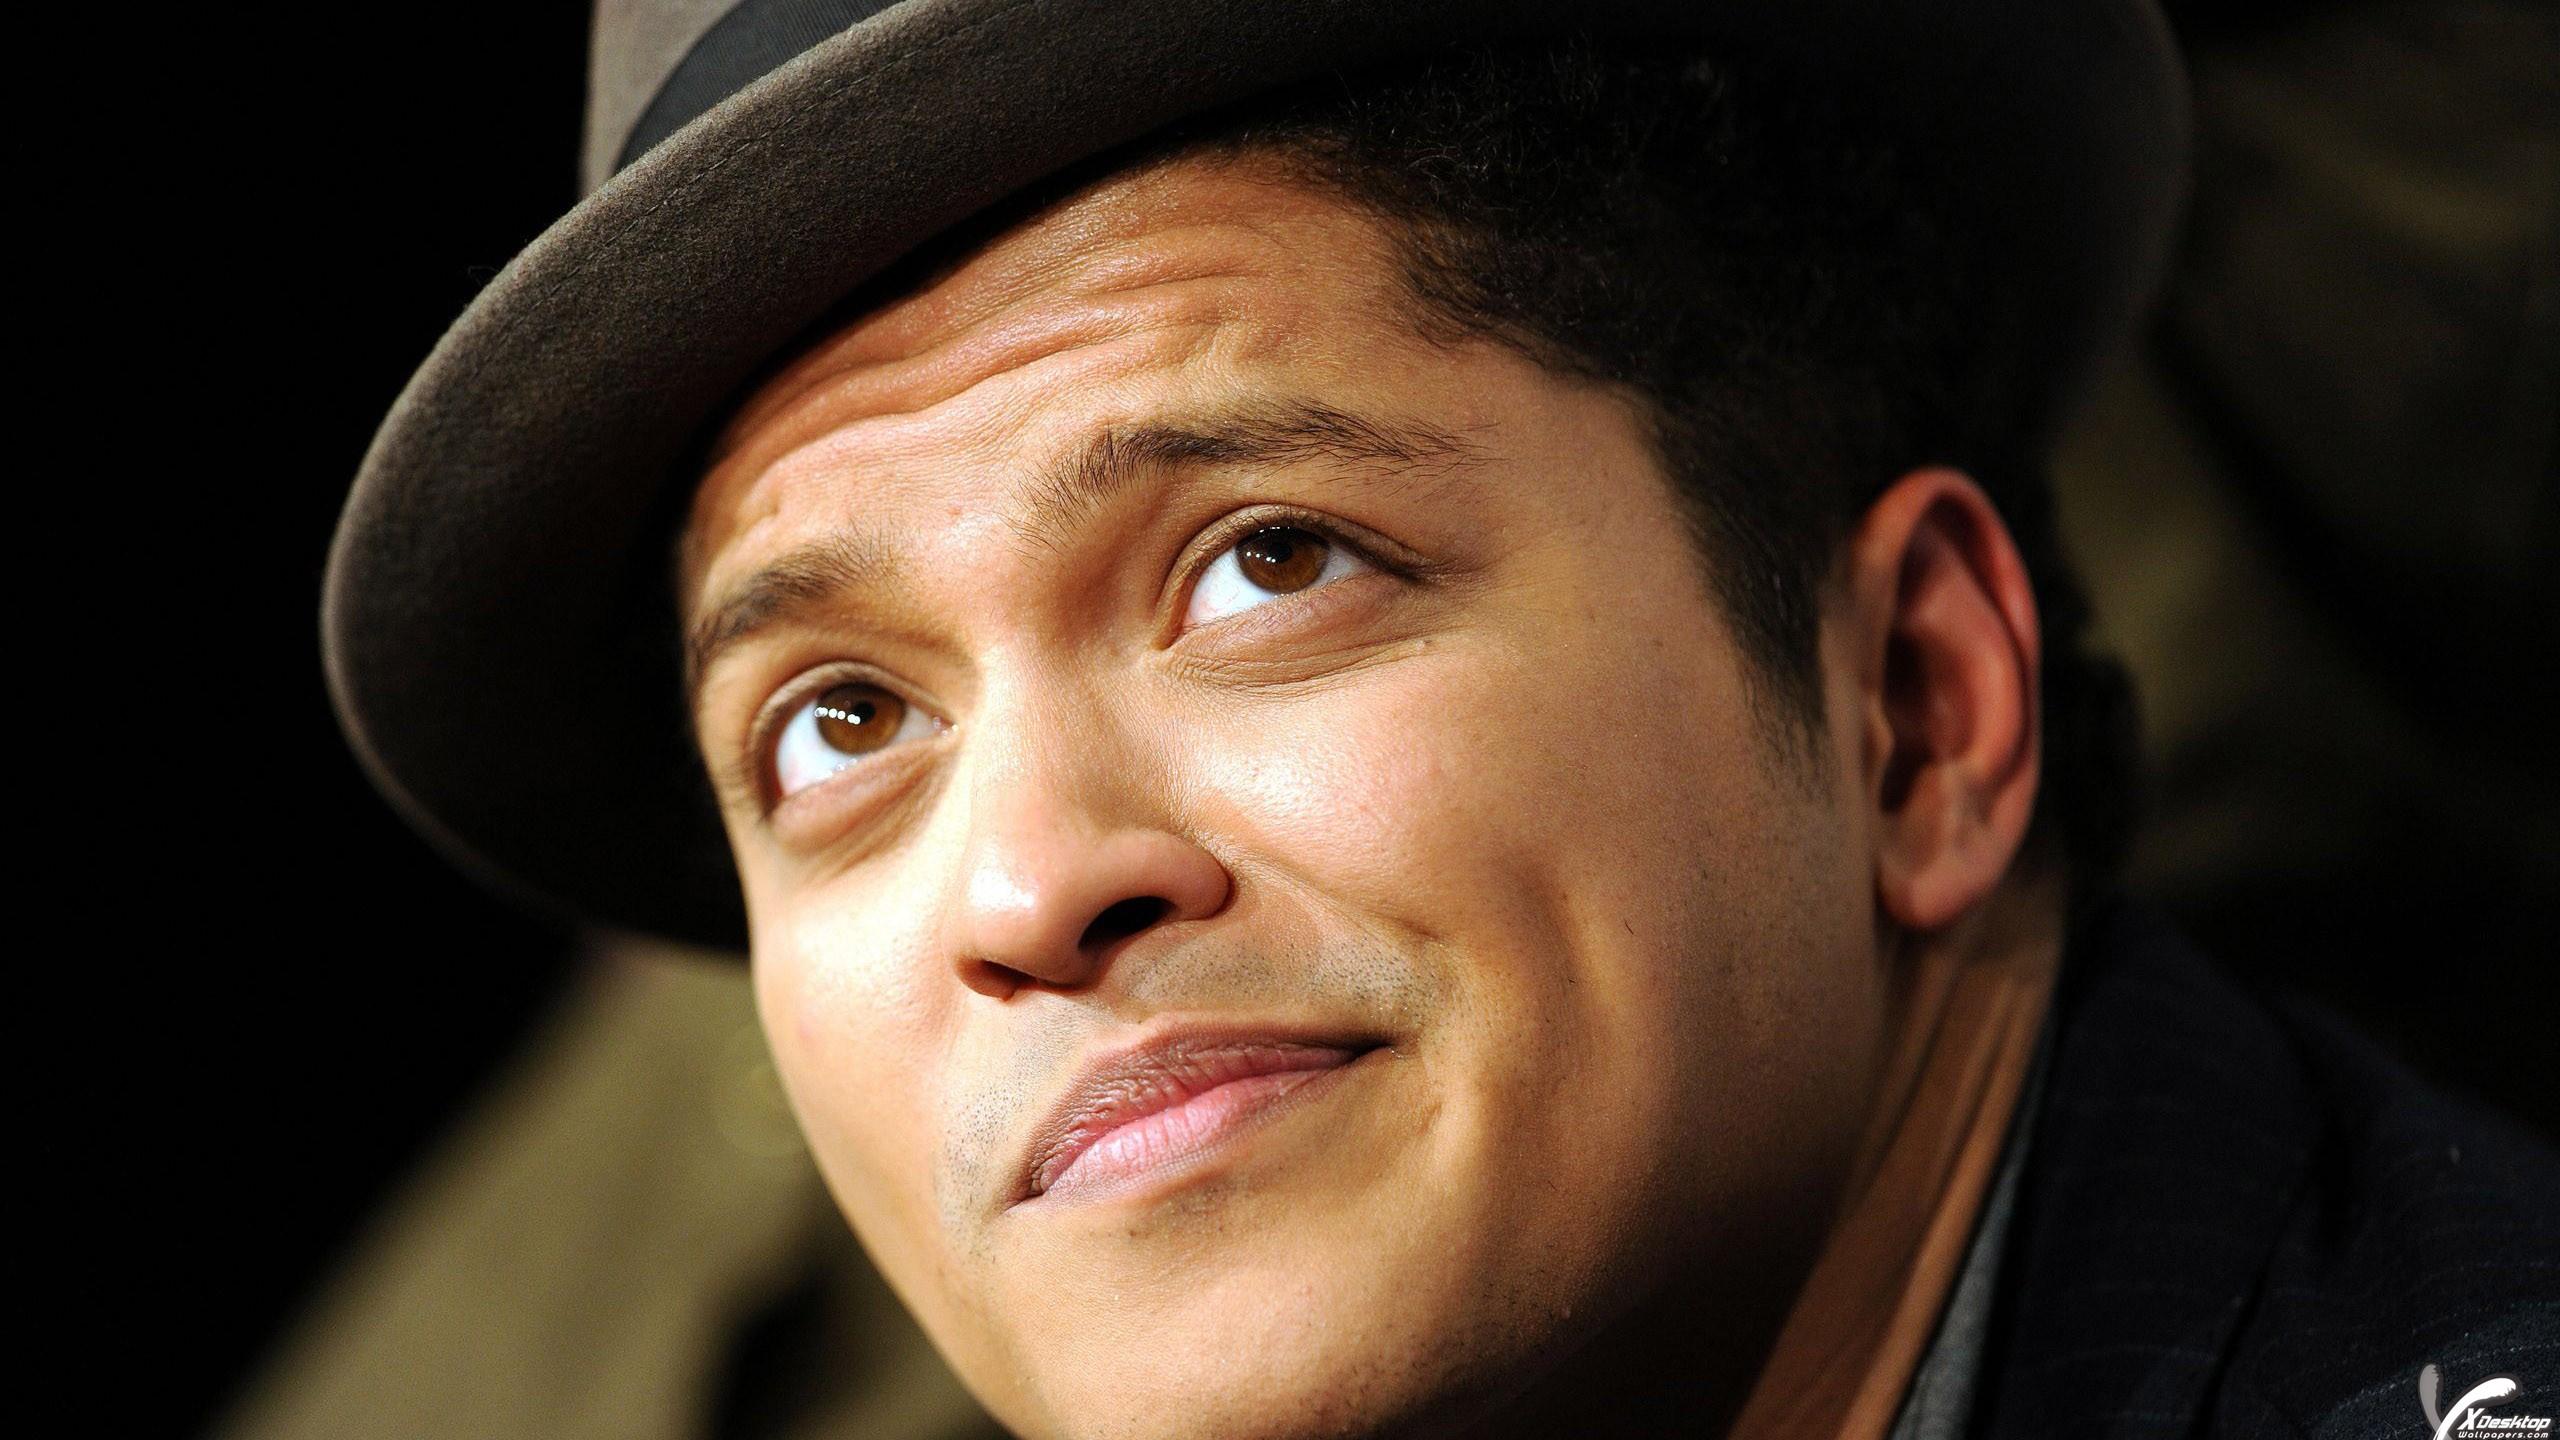 Bruno Mars Face Closeup Wearing A Hat Wallpaper